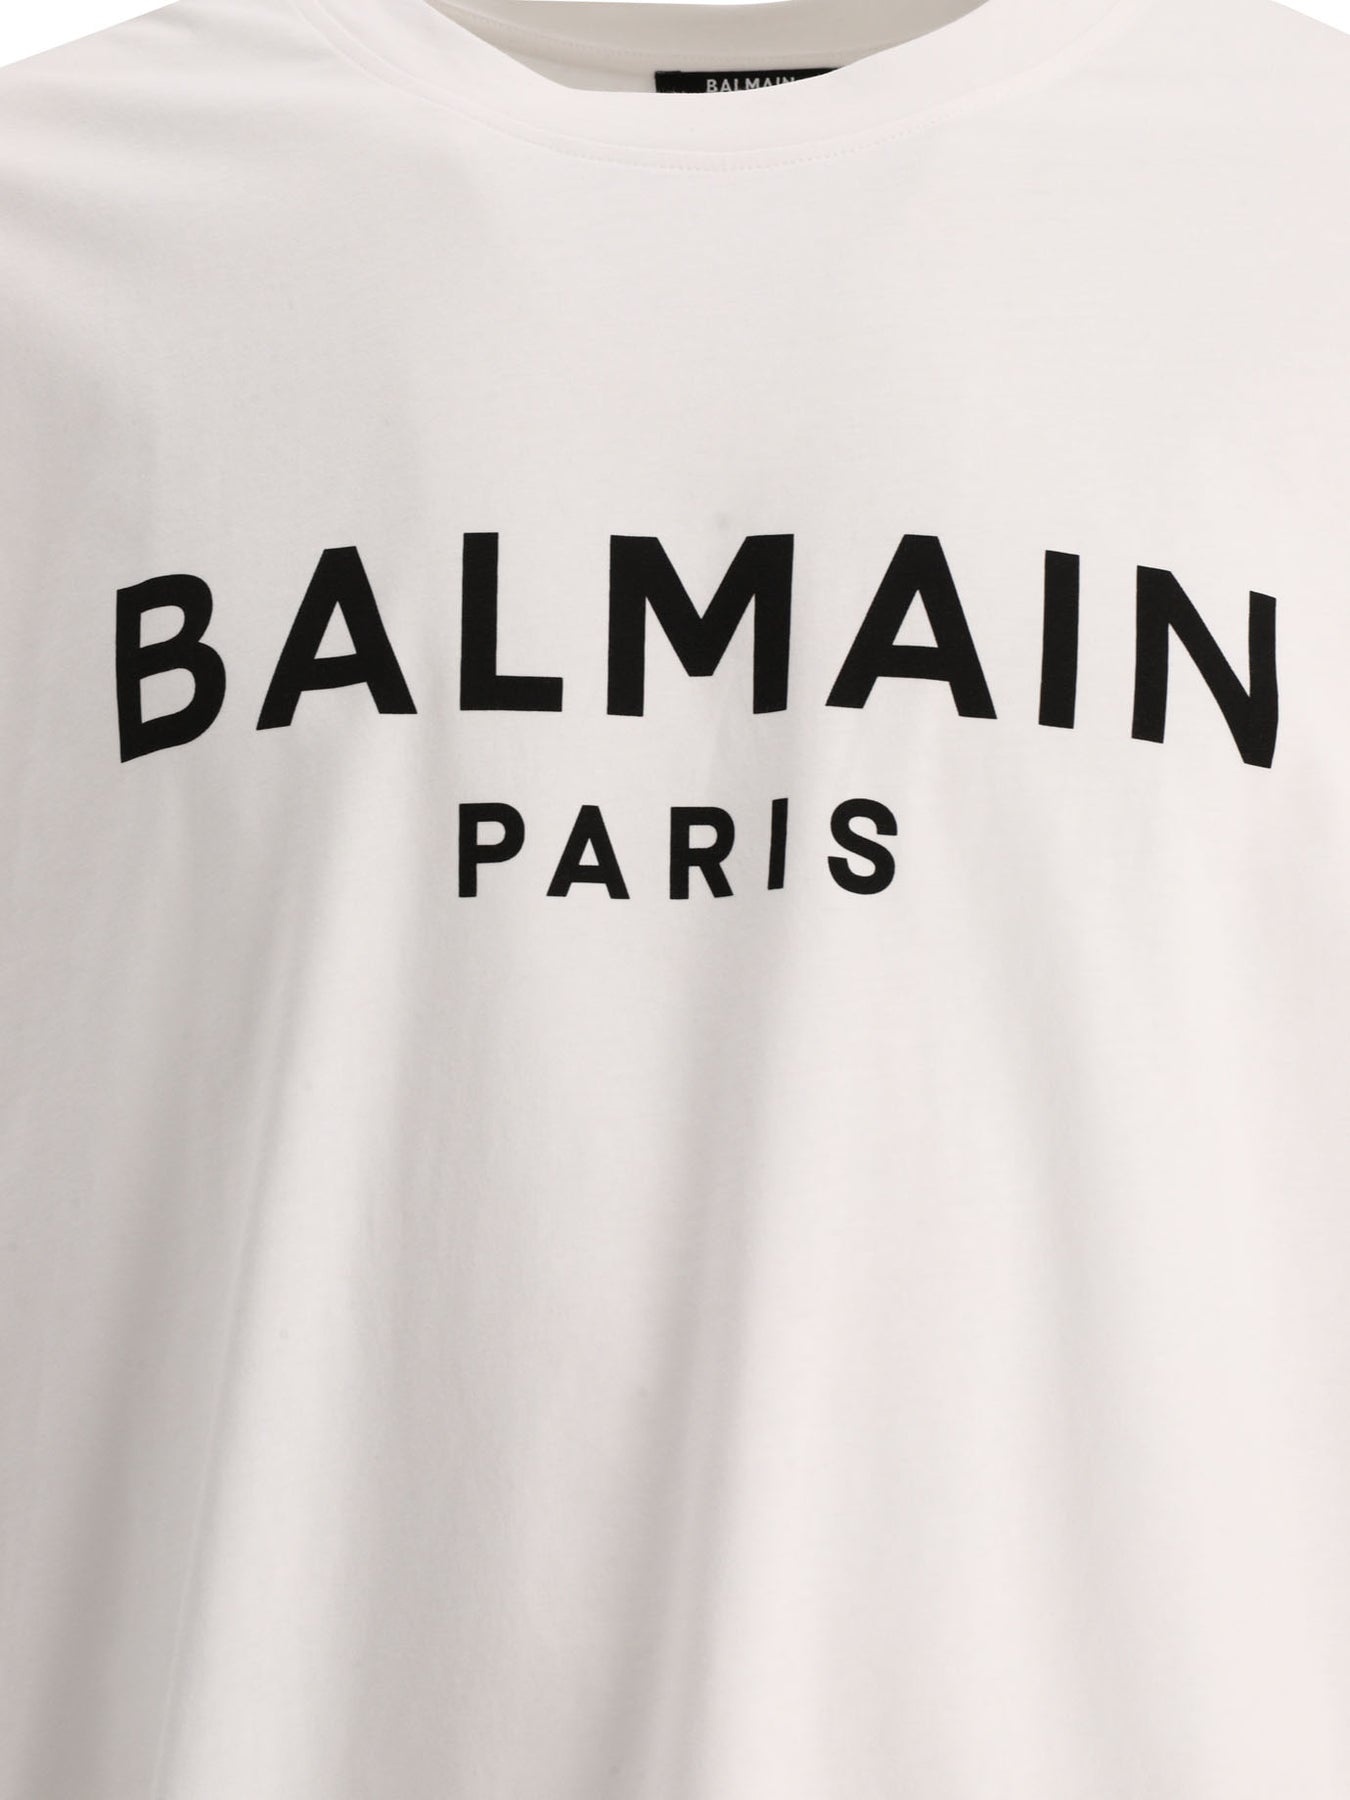 Balmain Paris T-Shirts White - 3